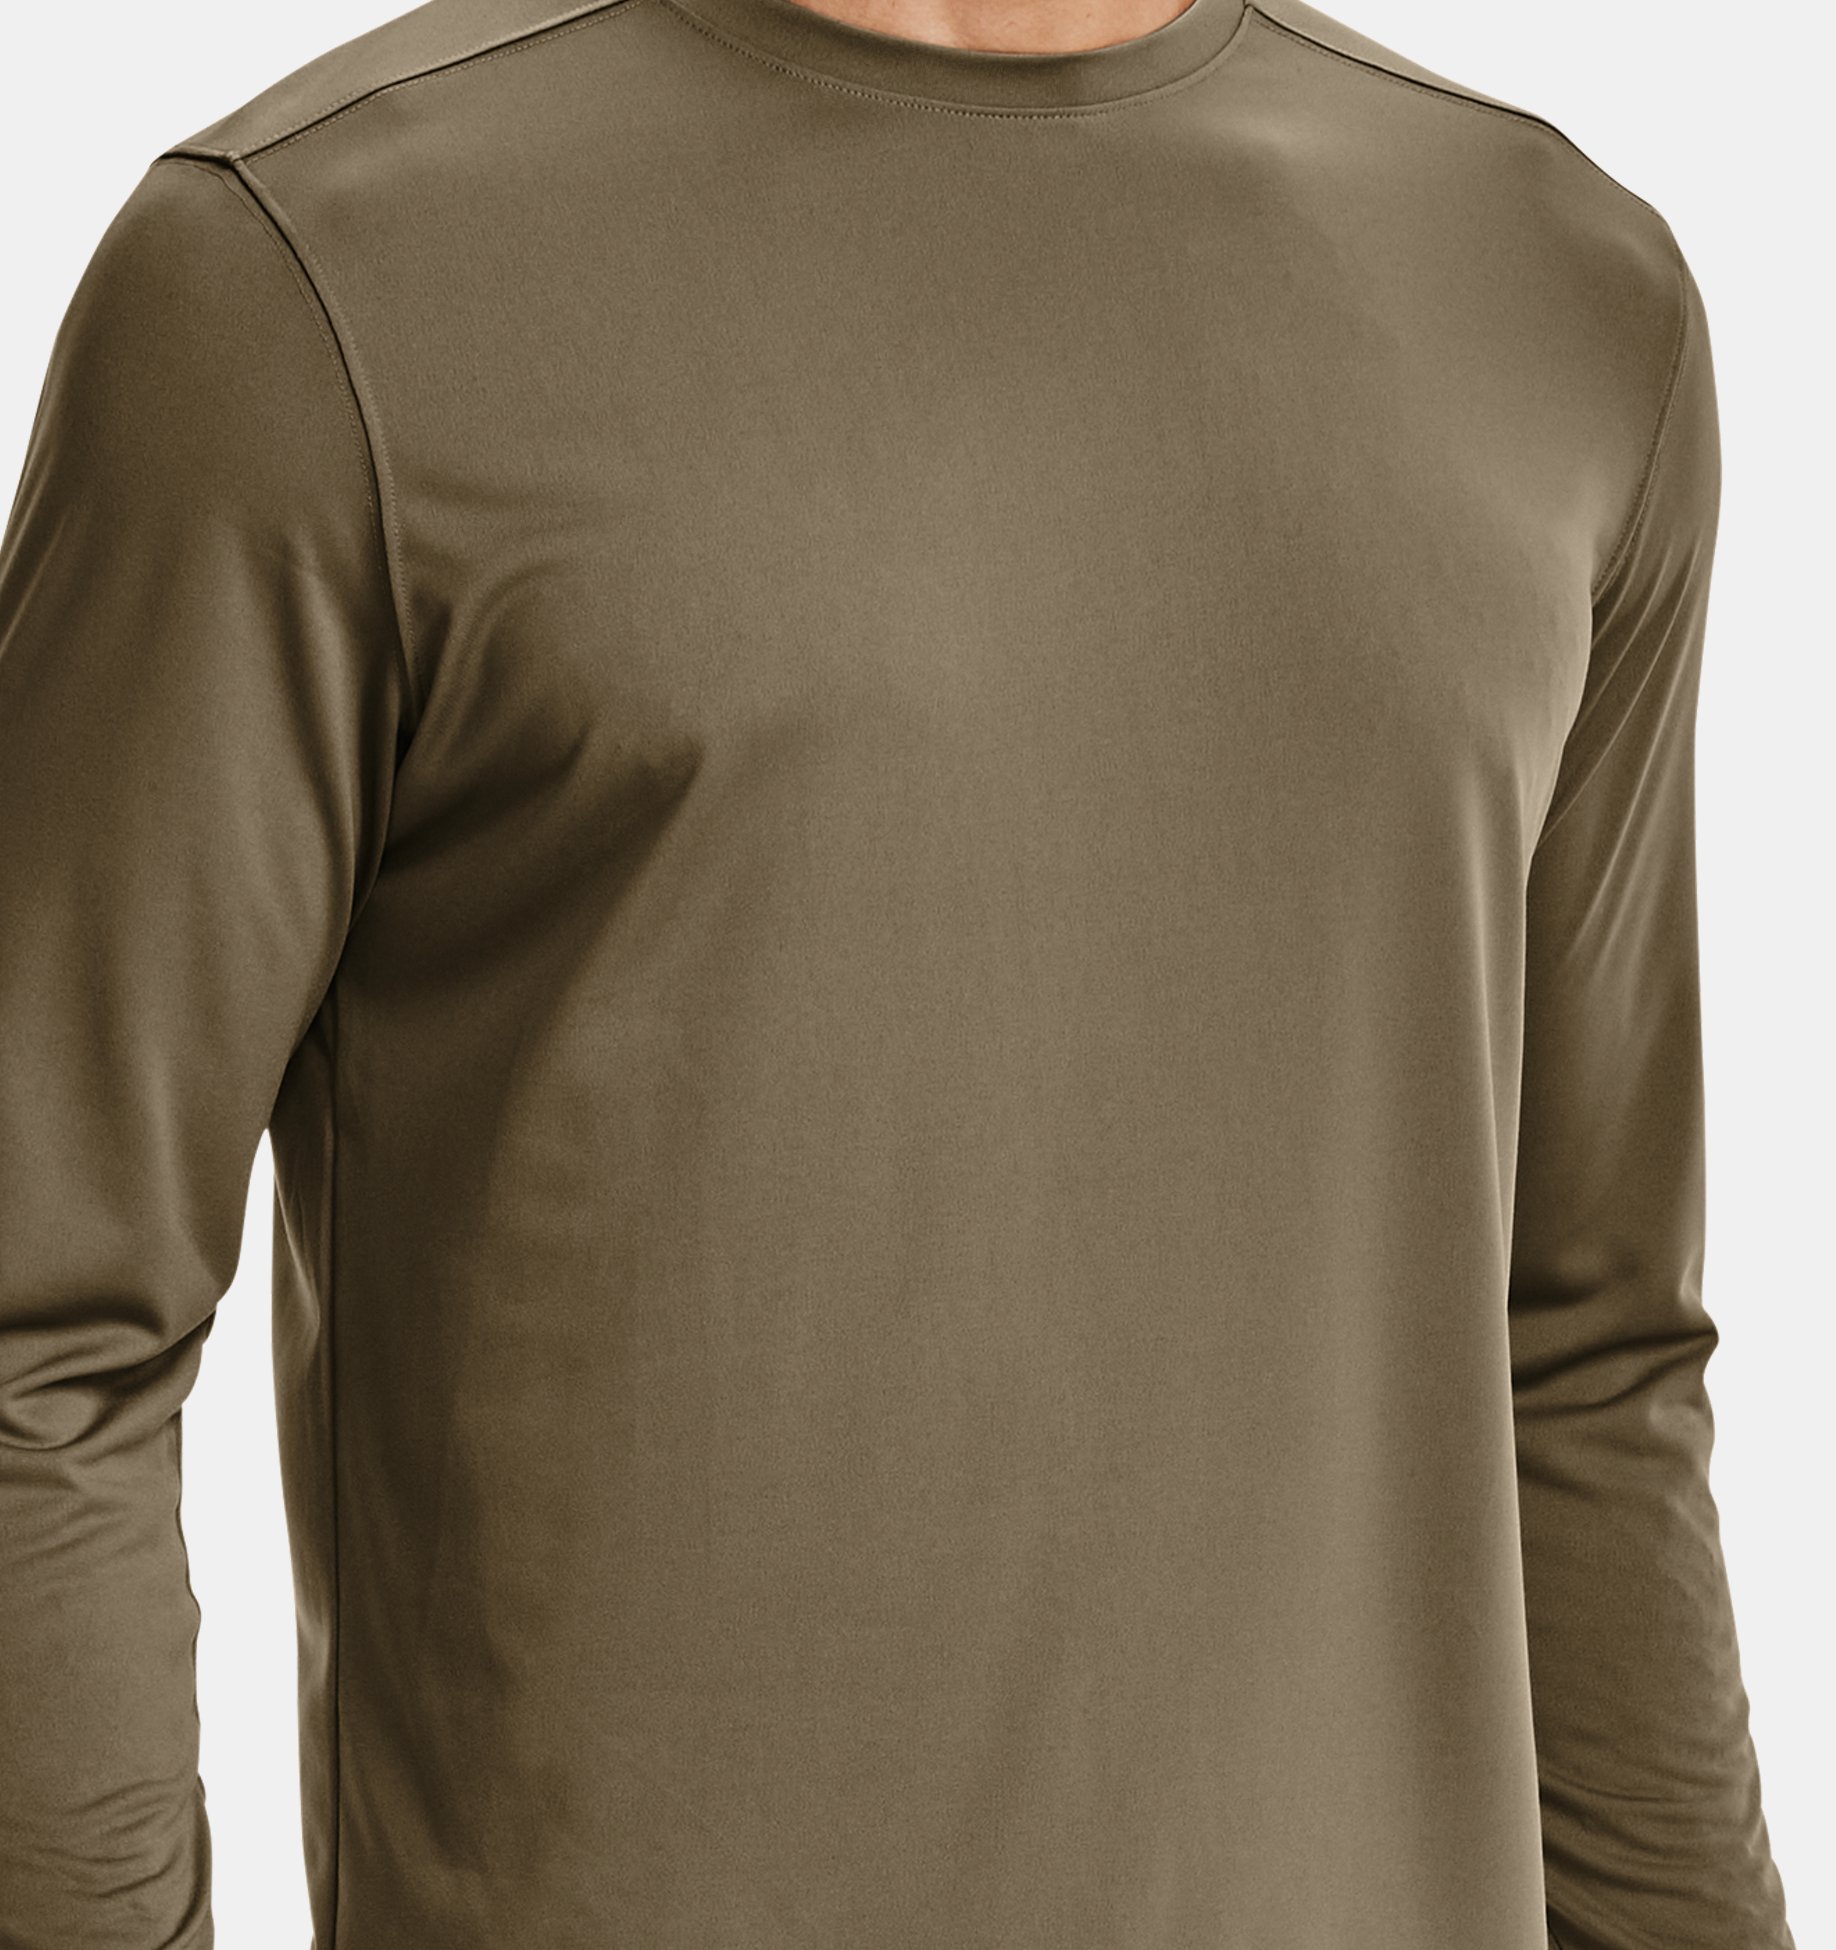 Men's Tactical UA Long Sleeve T-Shirt |